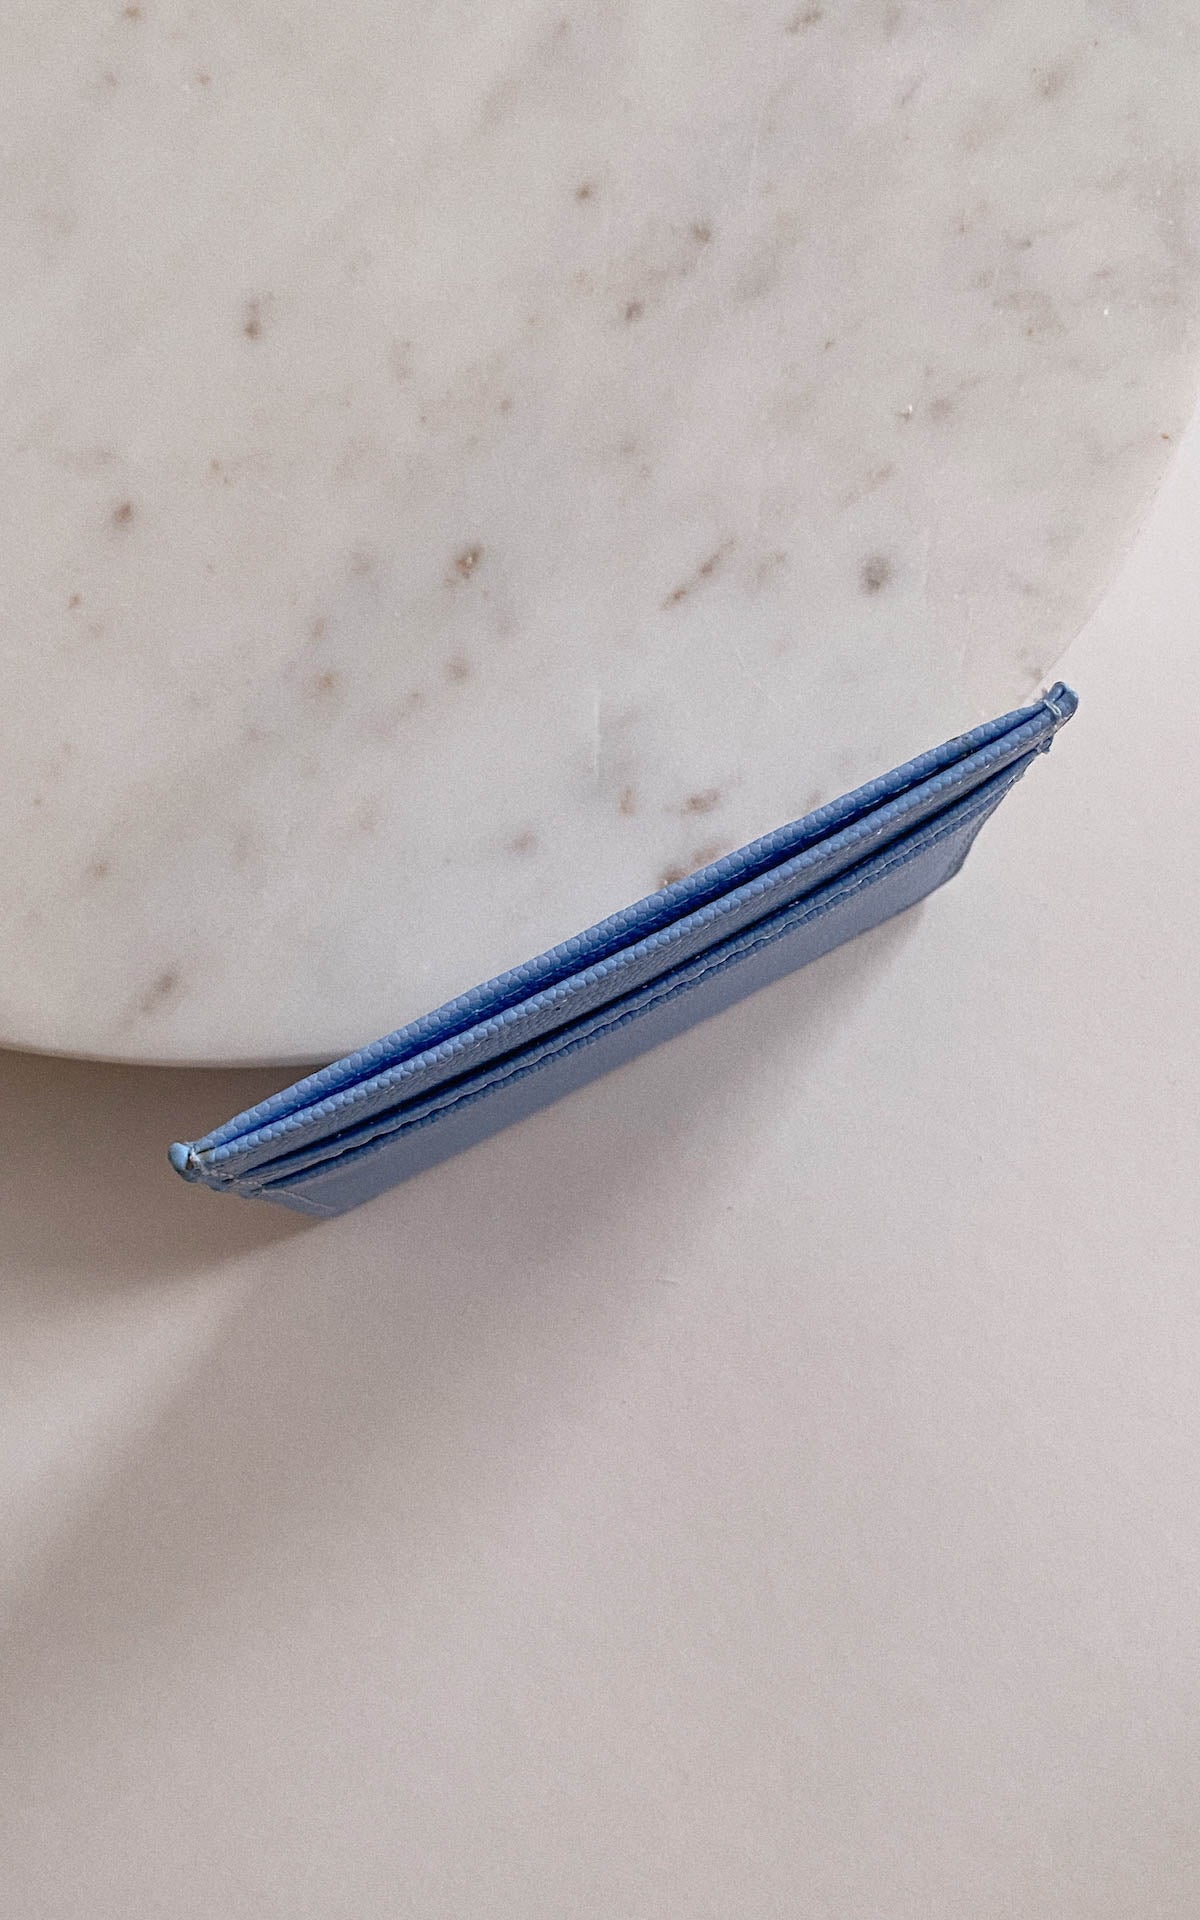 Something Blue Sleek Card Holder Wallet